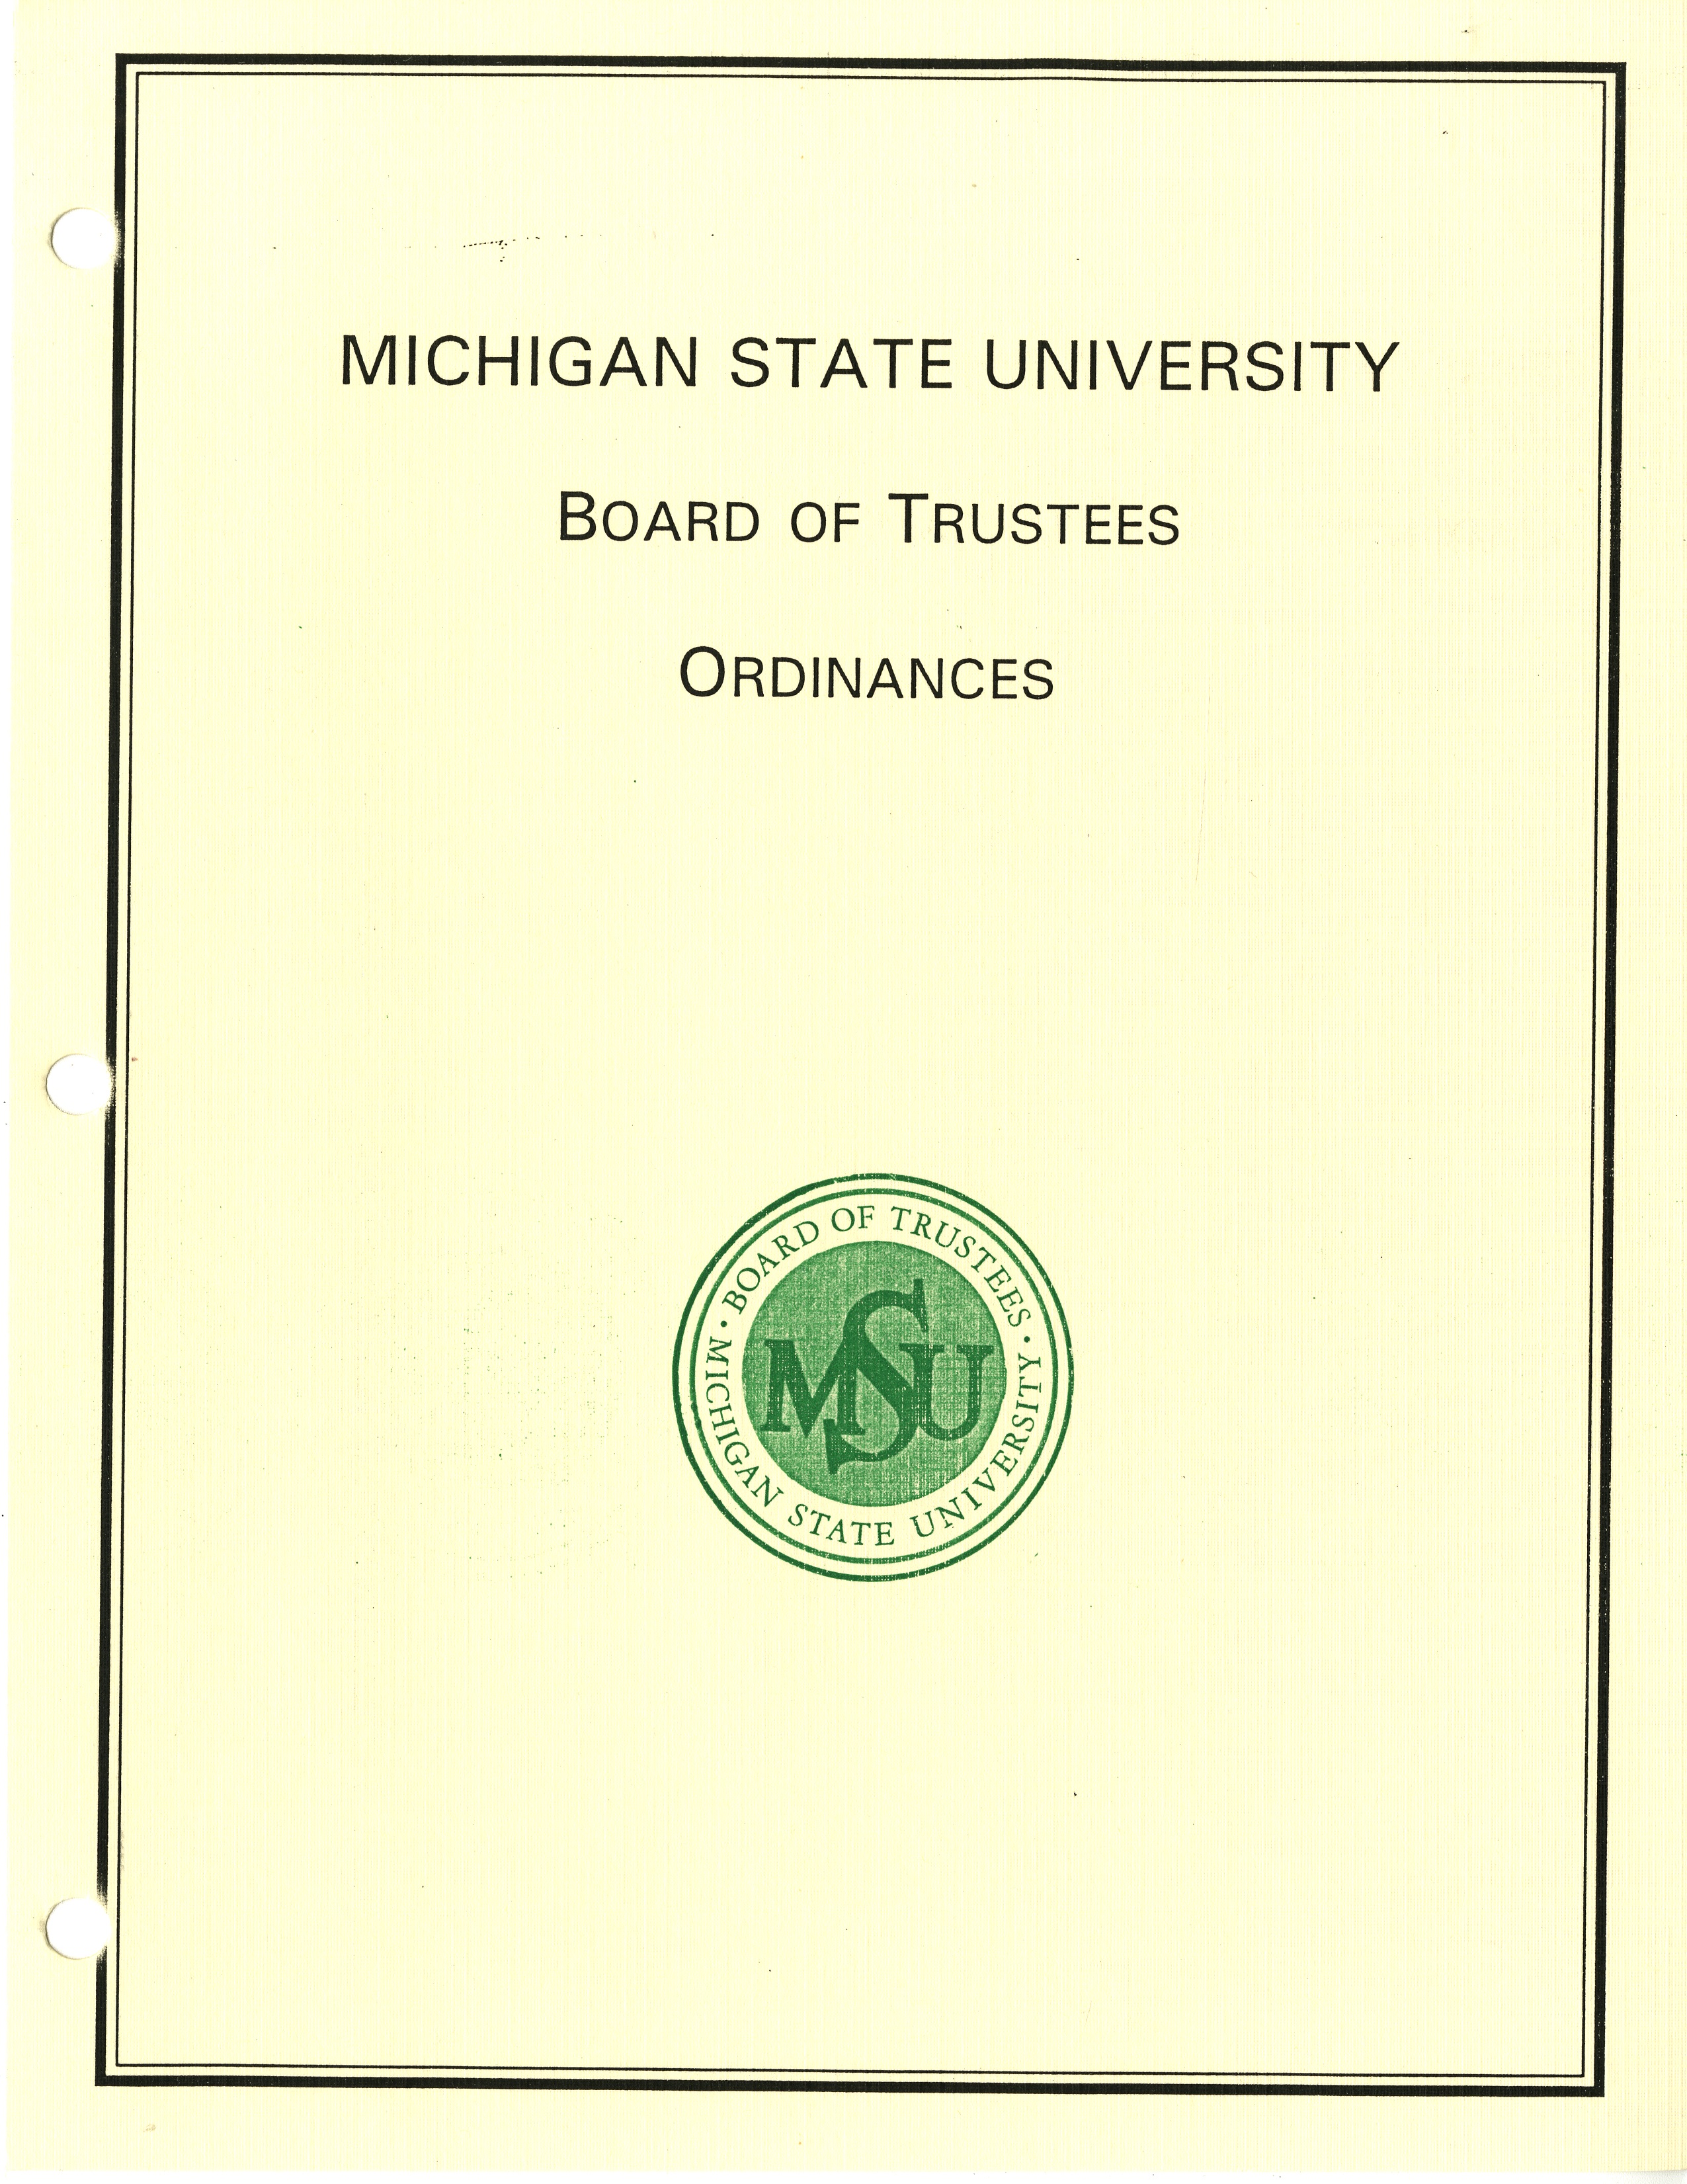 MSU Ordinances, 1996